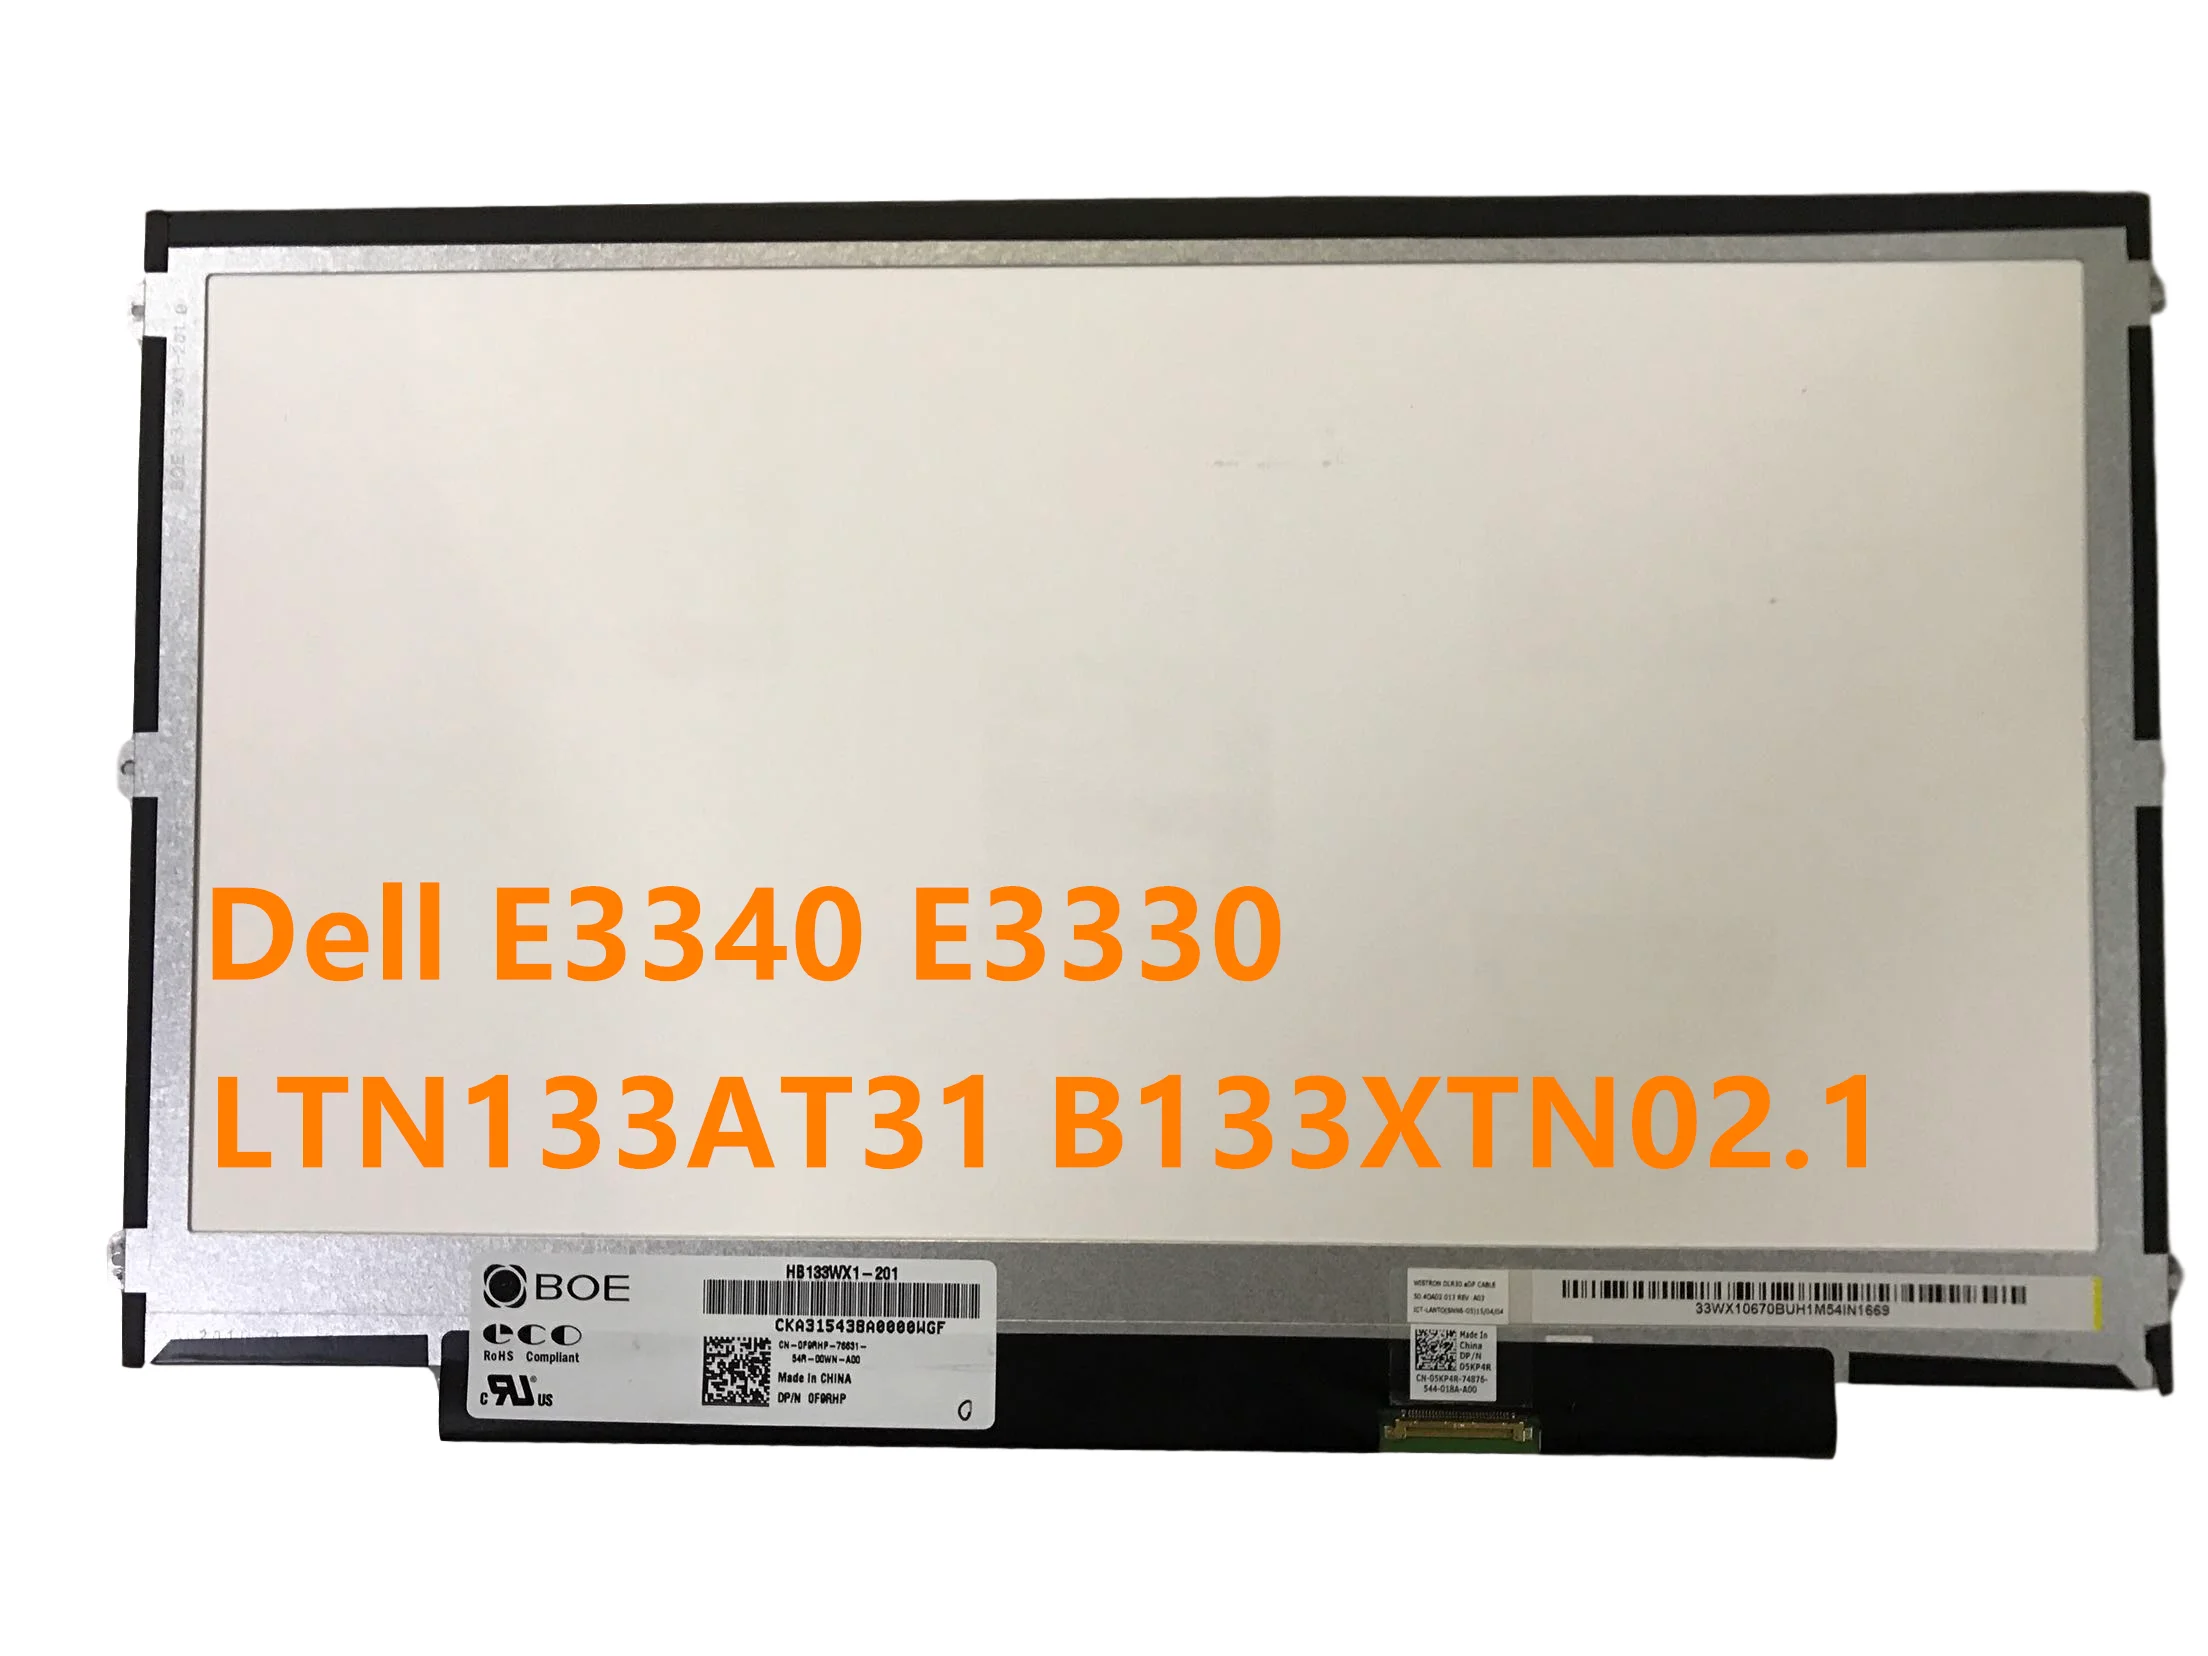 Dell E3340 E3330 LCD LTN133AT31 HB133WX1-201 B133XTN02. 1